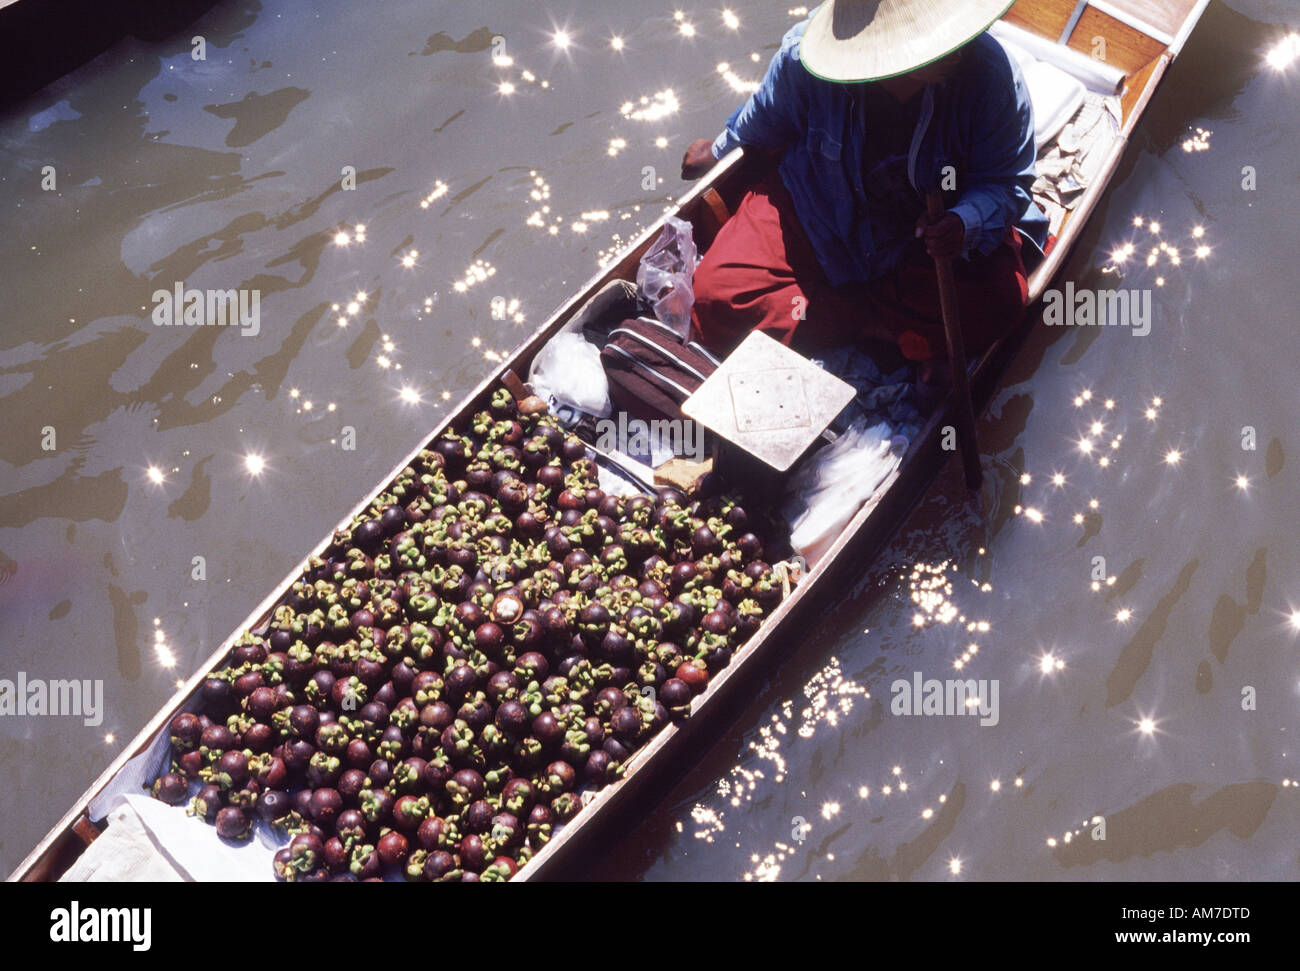 Floating market at Damneurnsaduak Thailand Image of a fruit seller on her boat selling mangosteens Stock Photo